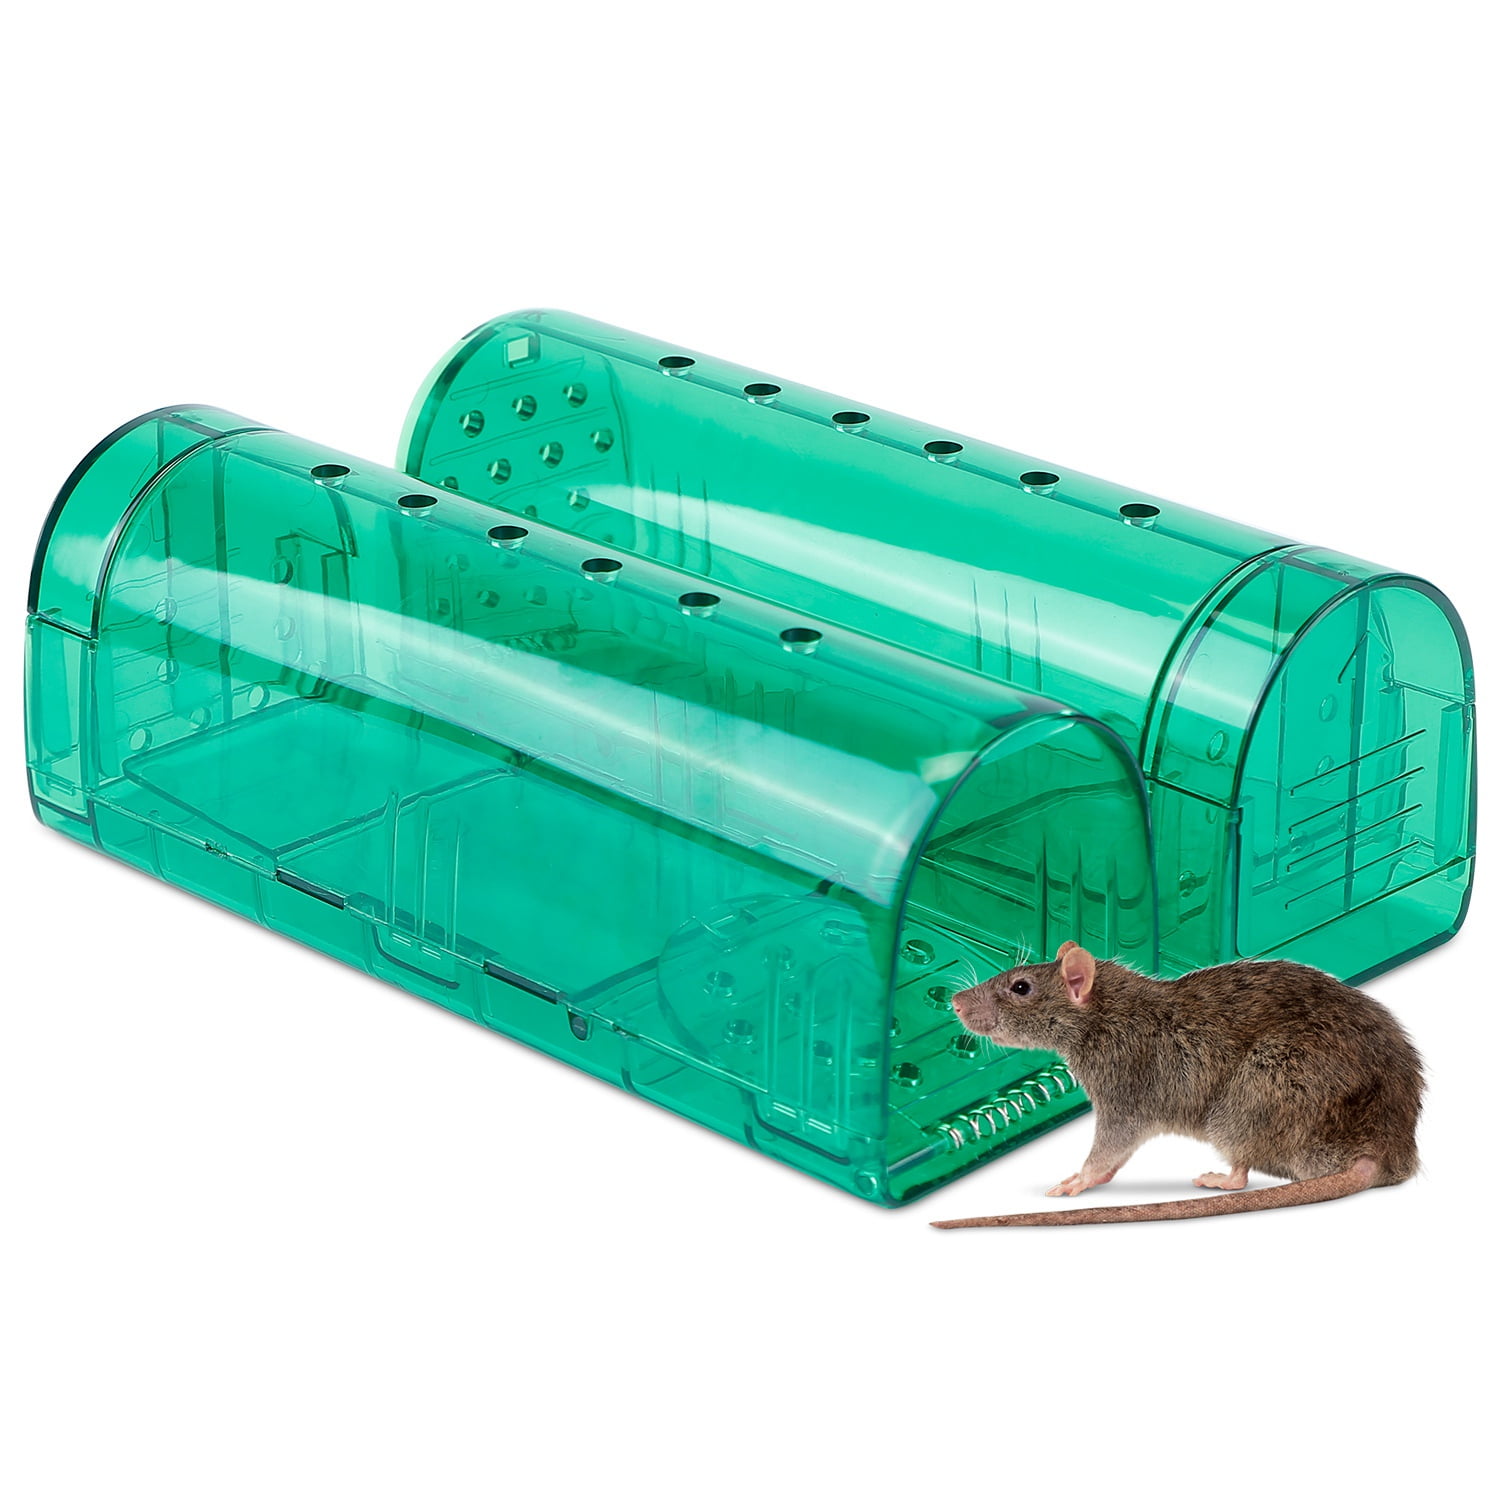 Details about   Hot Reusable 2x Humane Mouse Trap No Kill Rodent Catch Live Cage Pet Child Safe 